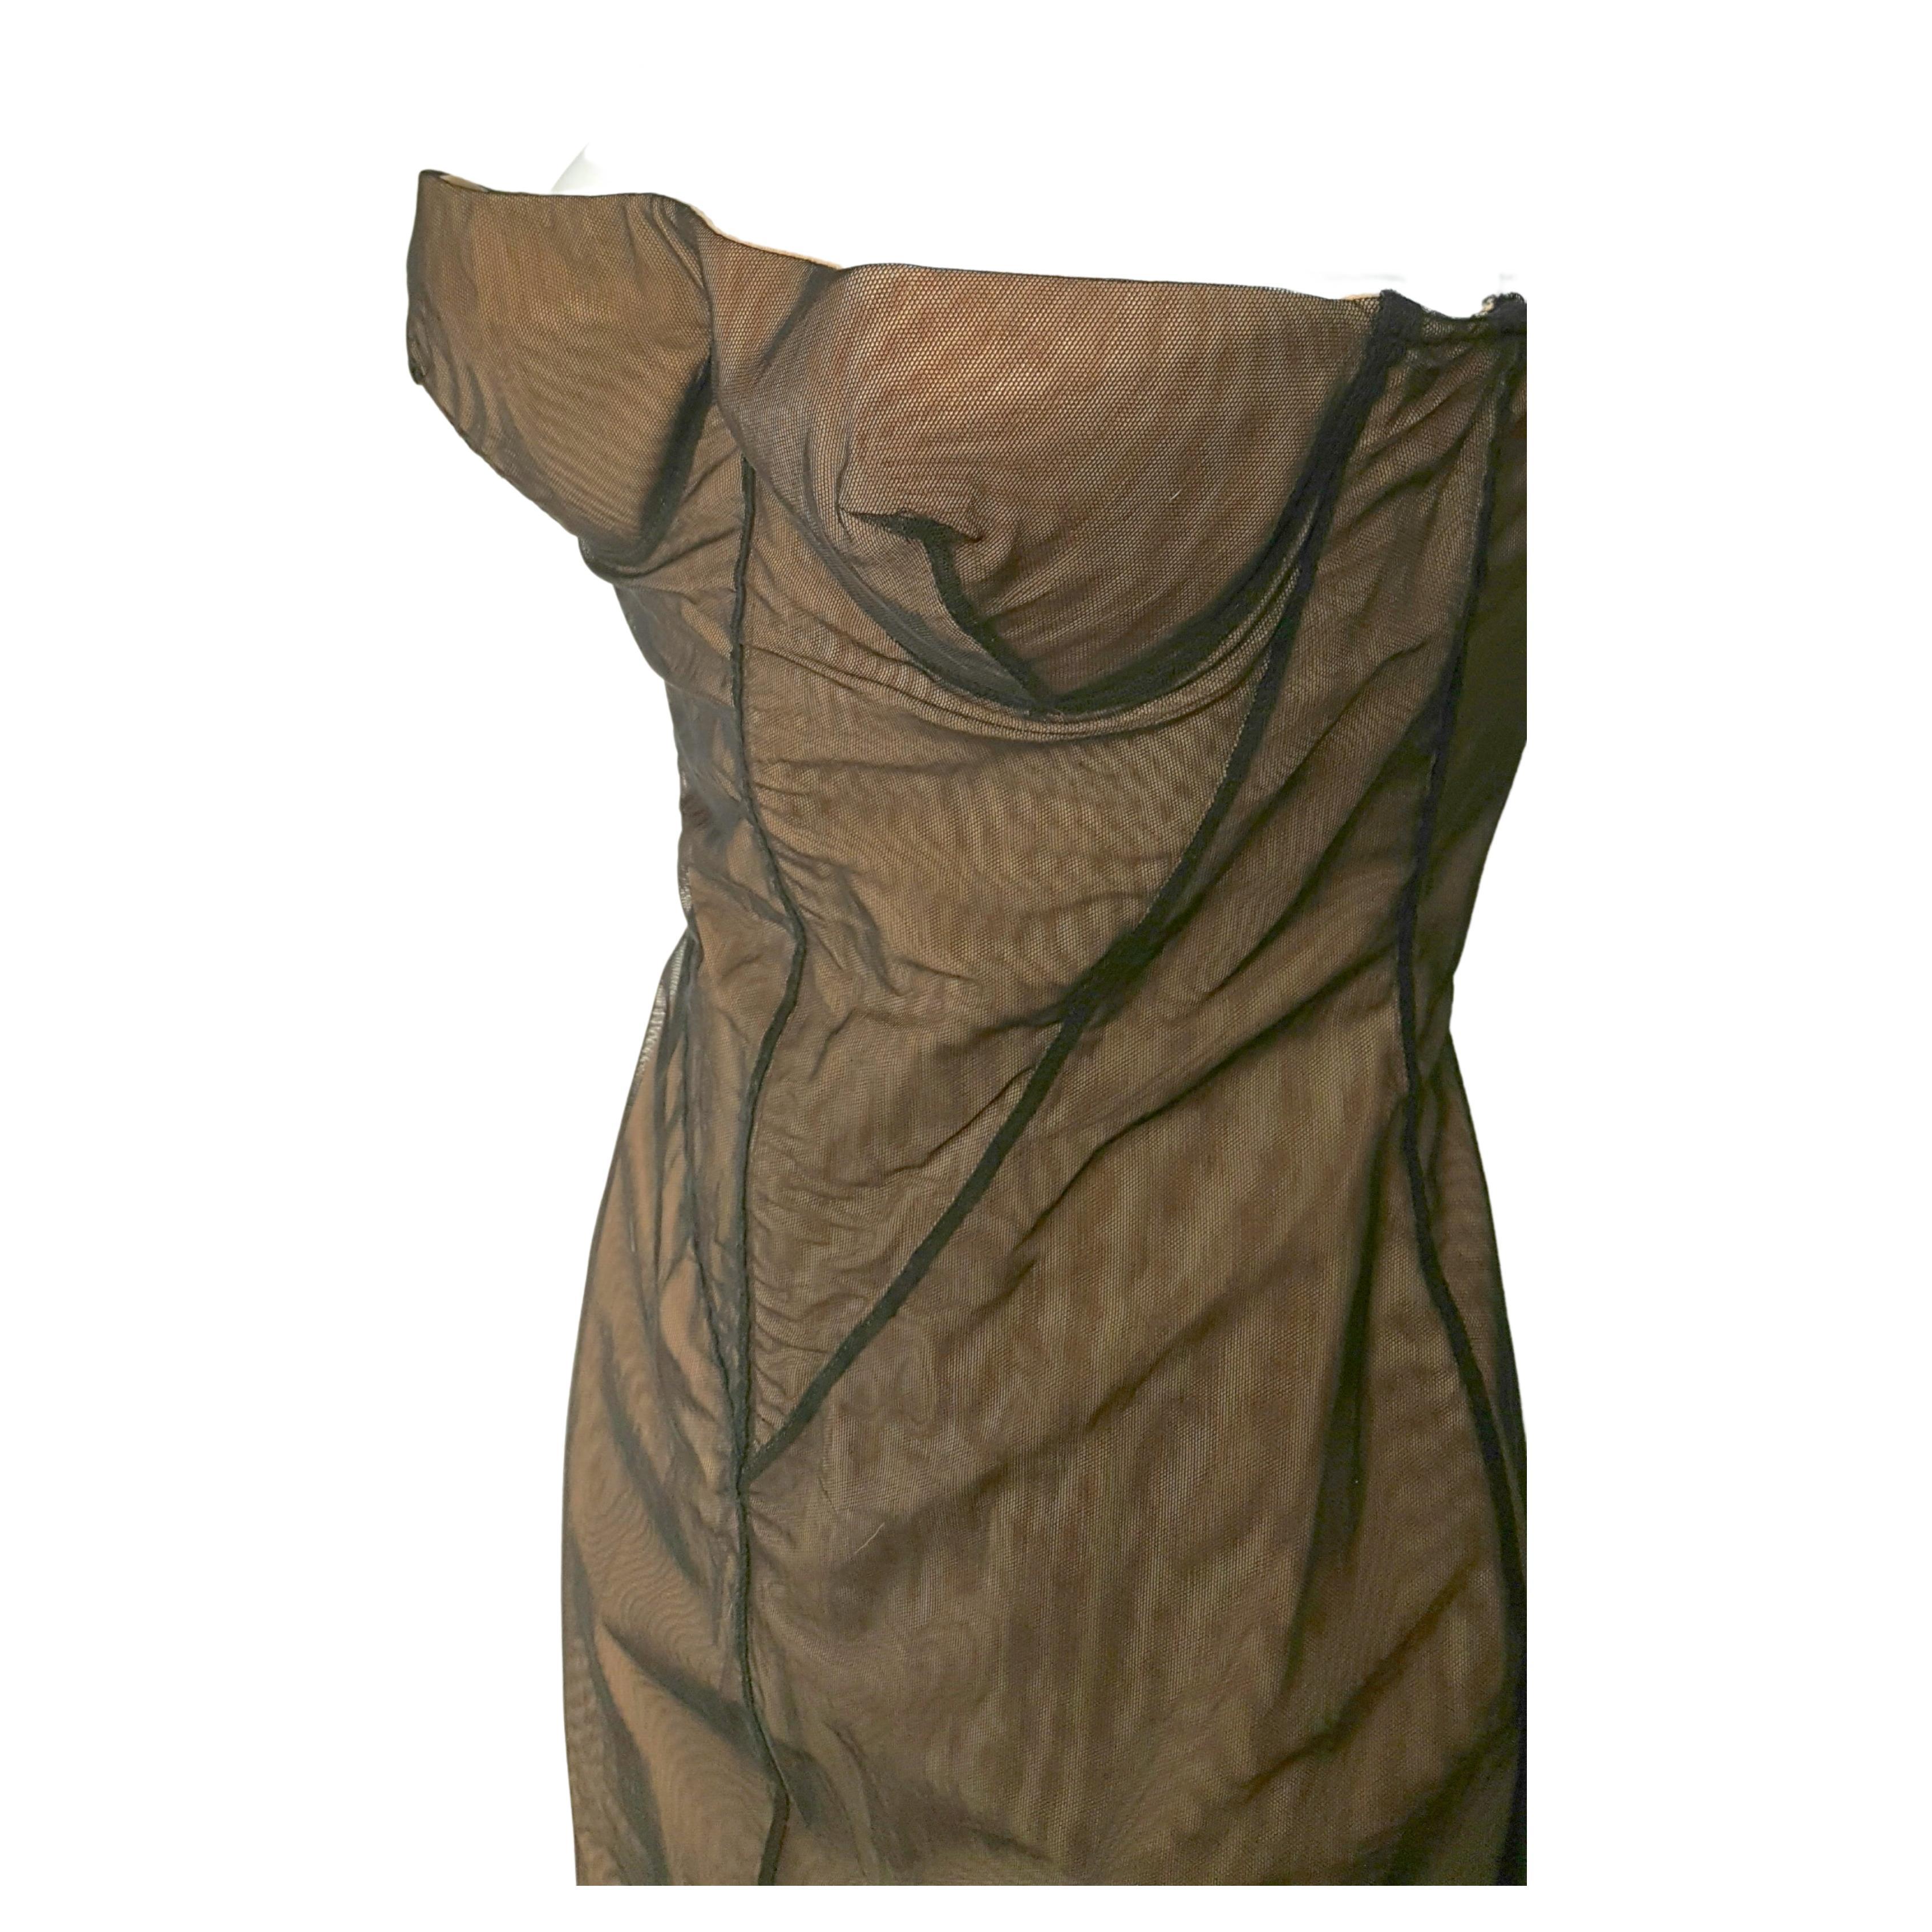 Gucci TomFord 2001 AwardYear RunwayLook2 Balconette Korsett trägerloses nudefarbenes Kleid mit Korsett im Angebot 1